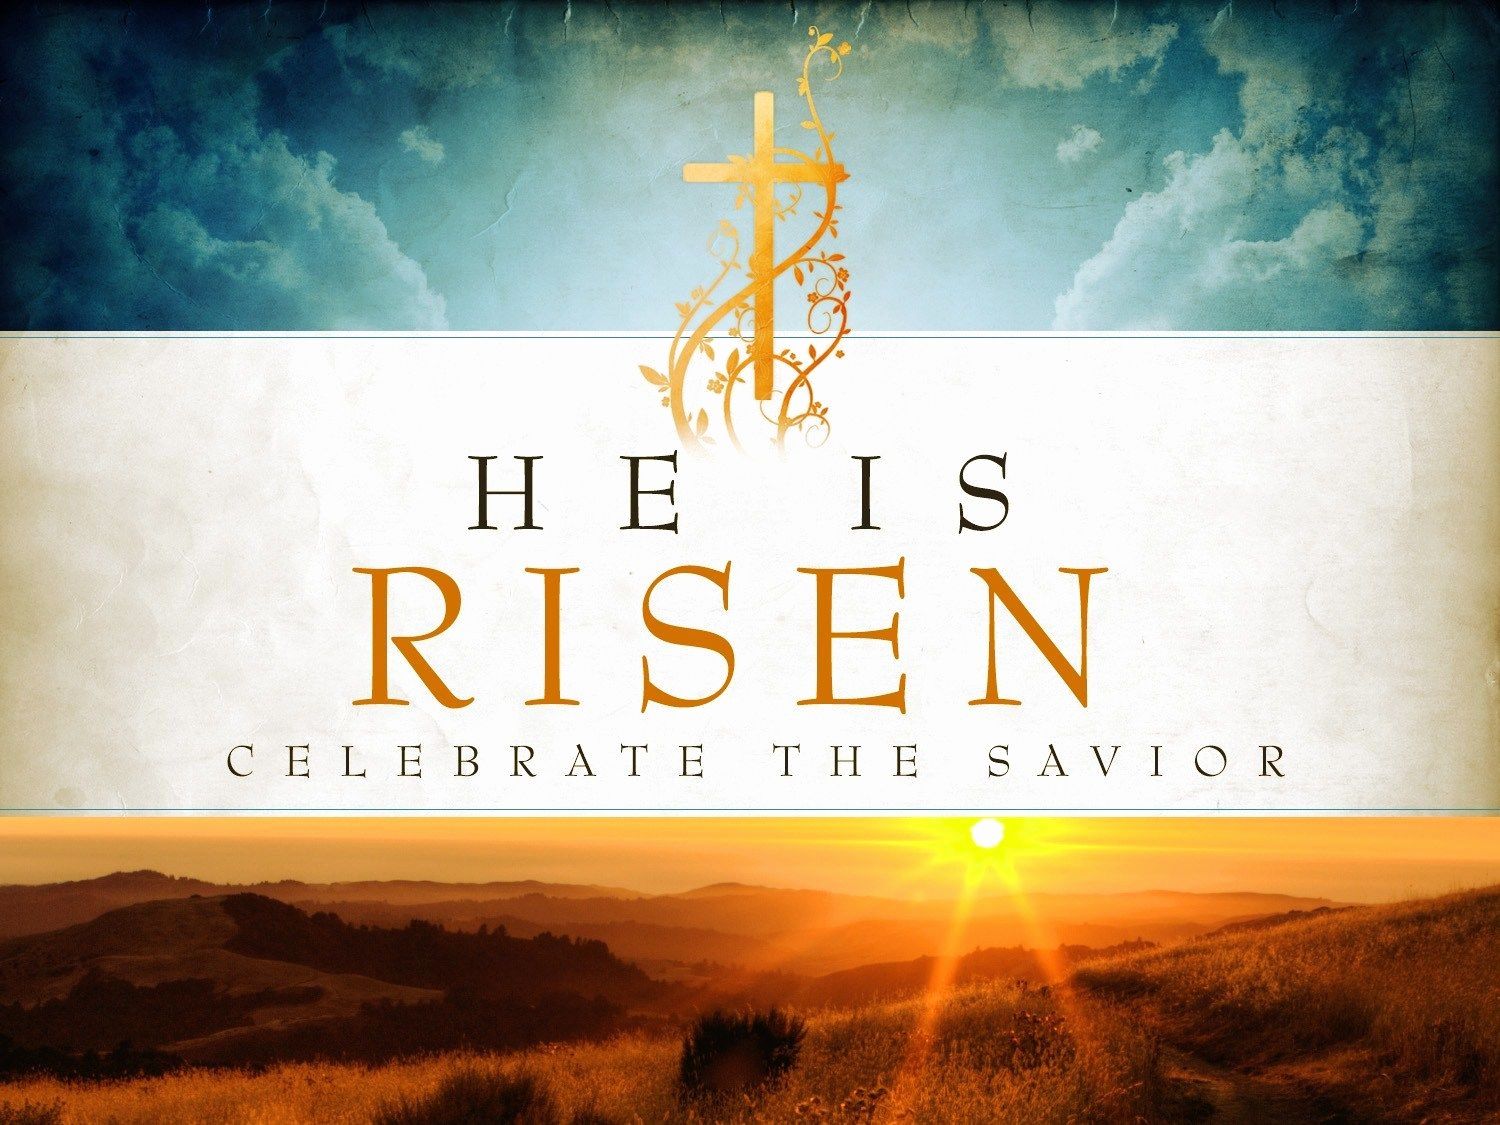 Fresh Easter Christian Image for You